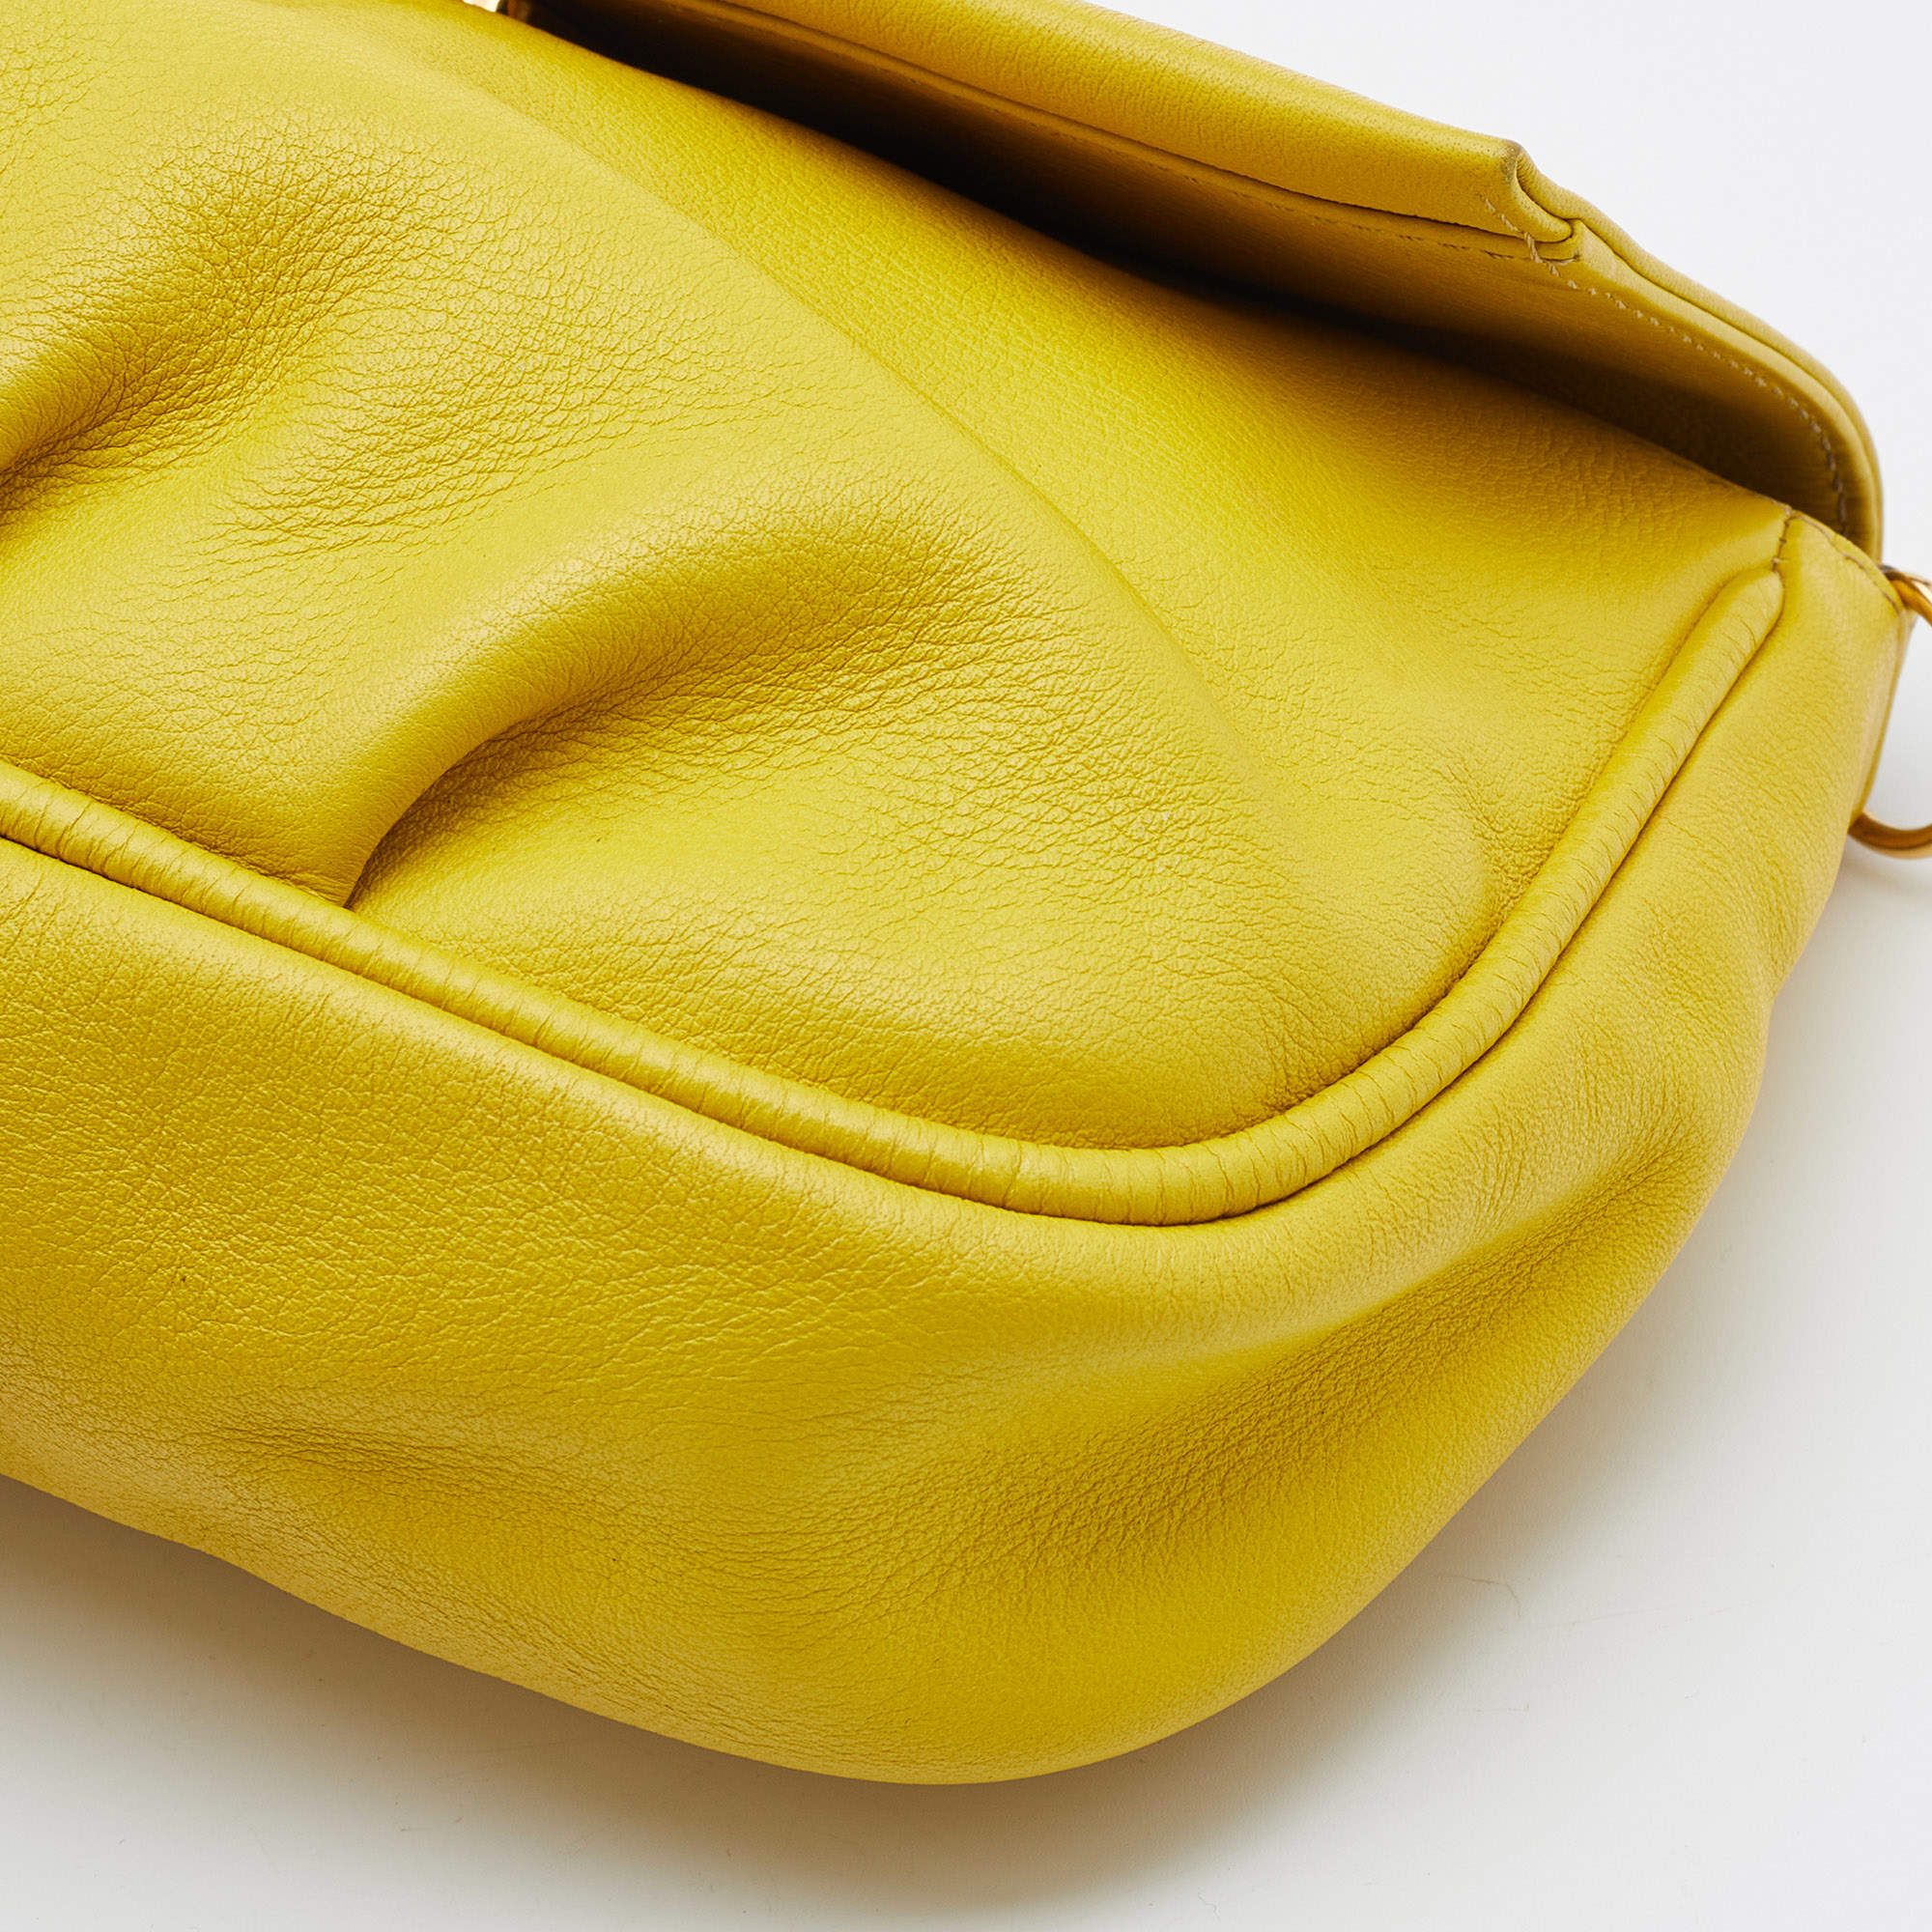 Fendi Leather Clutch Bag Yellow - Allu USA